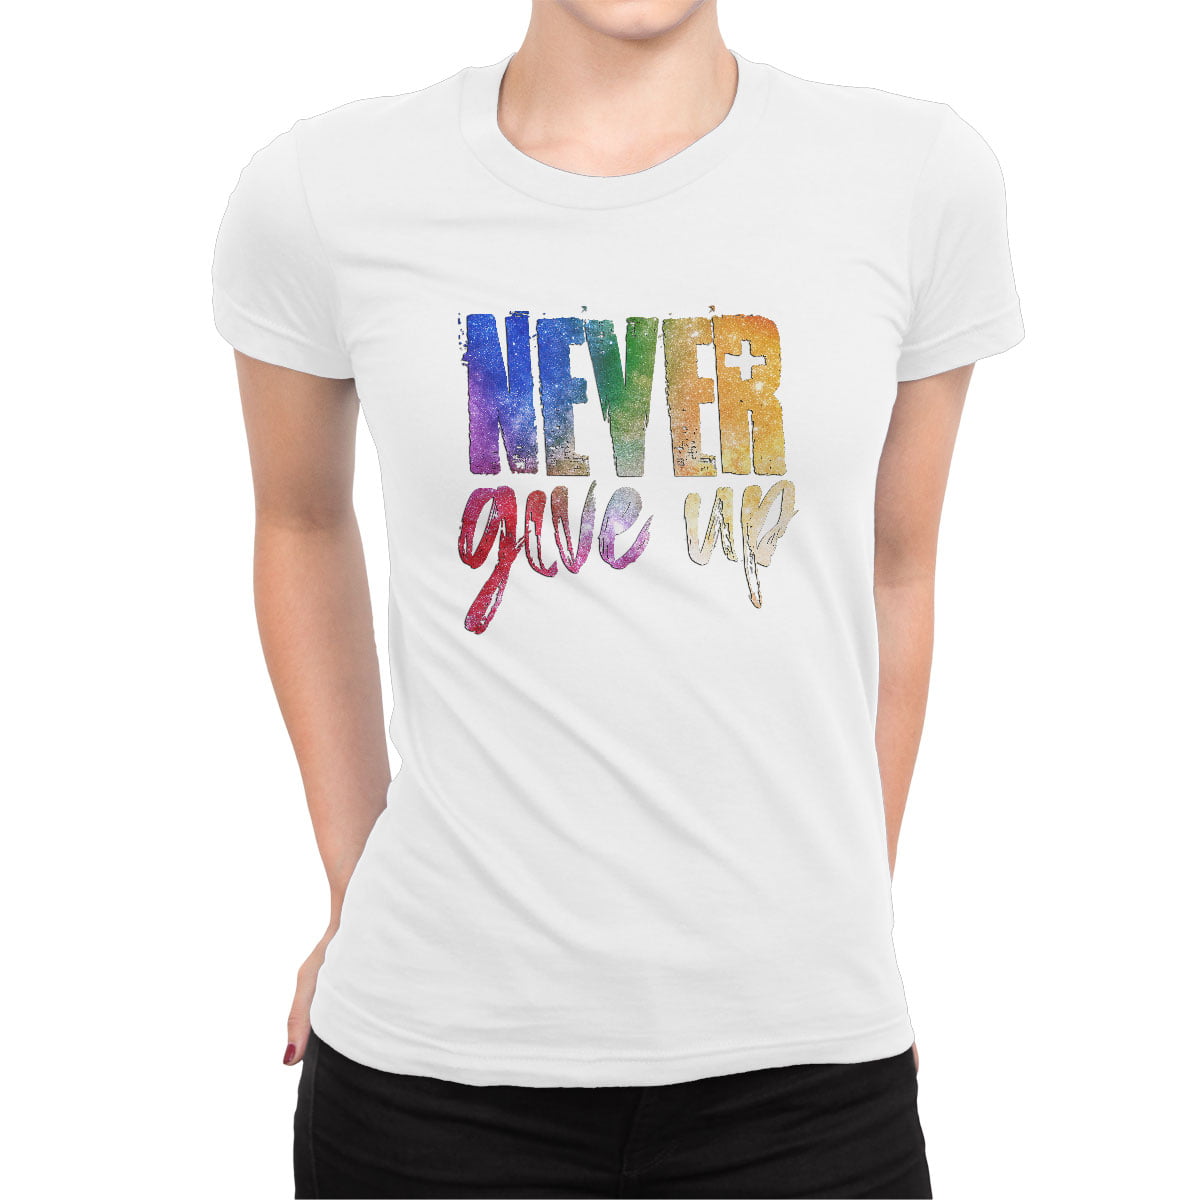 Never give up tshirt kadin b - never give up kadın t-shirt - figurex